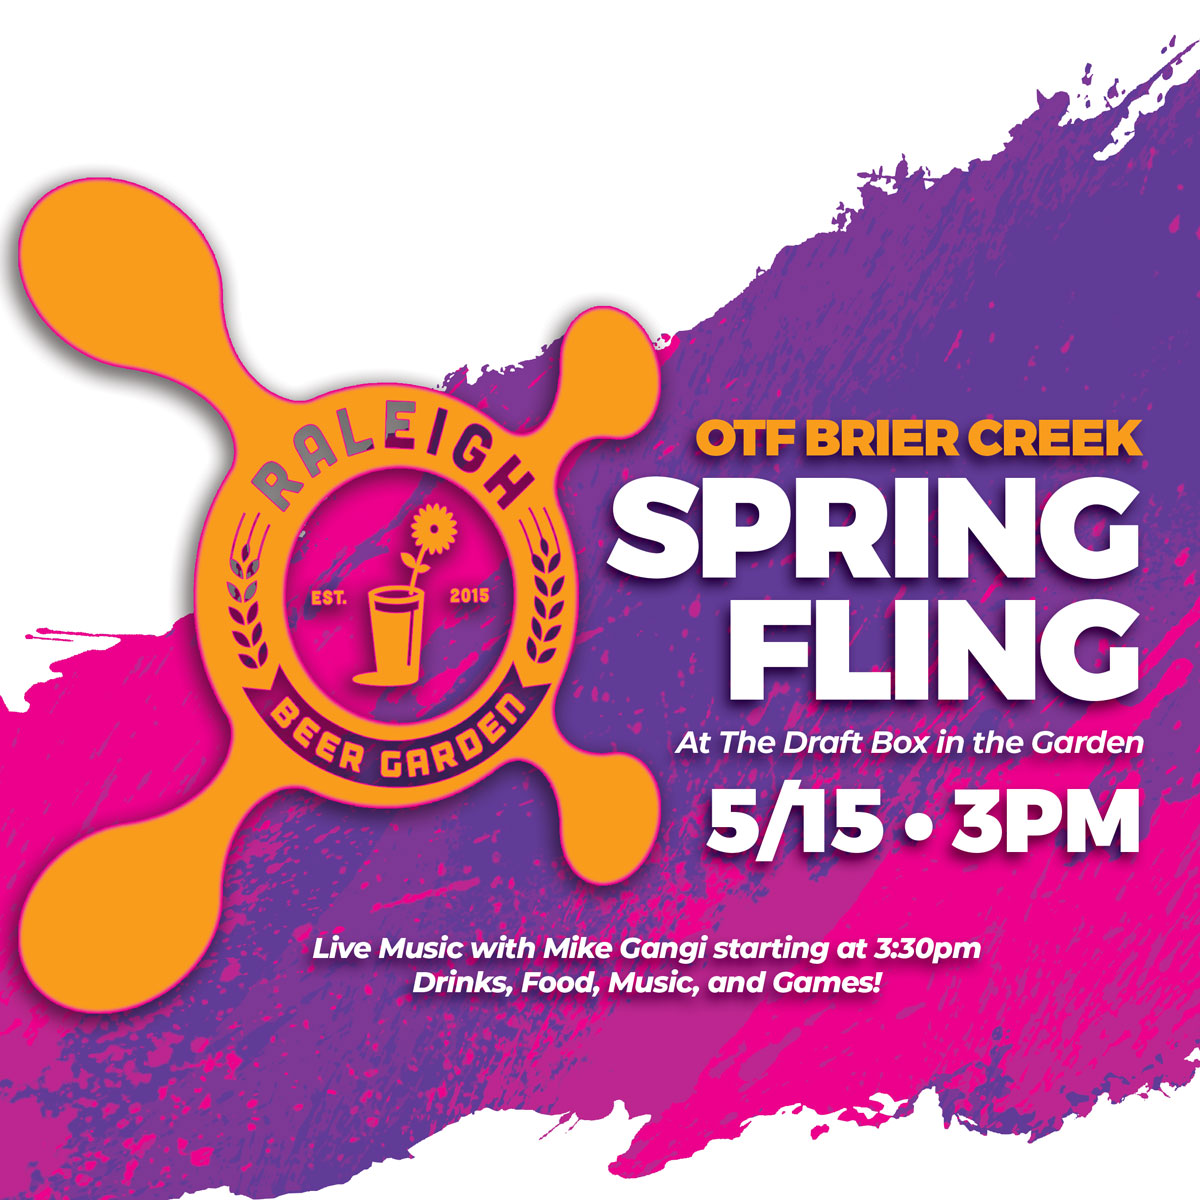 OTF Brier Creek Spring Fling